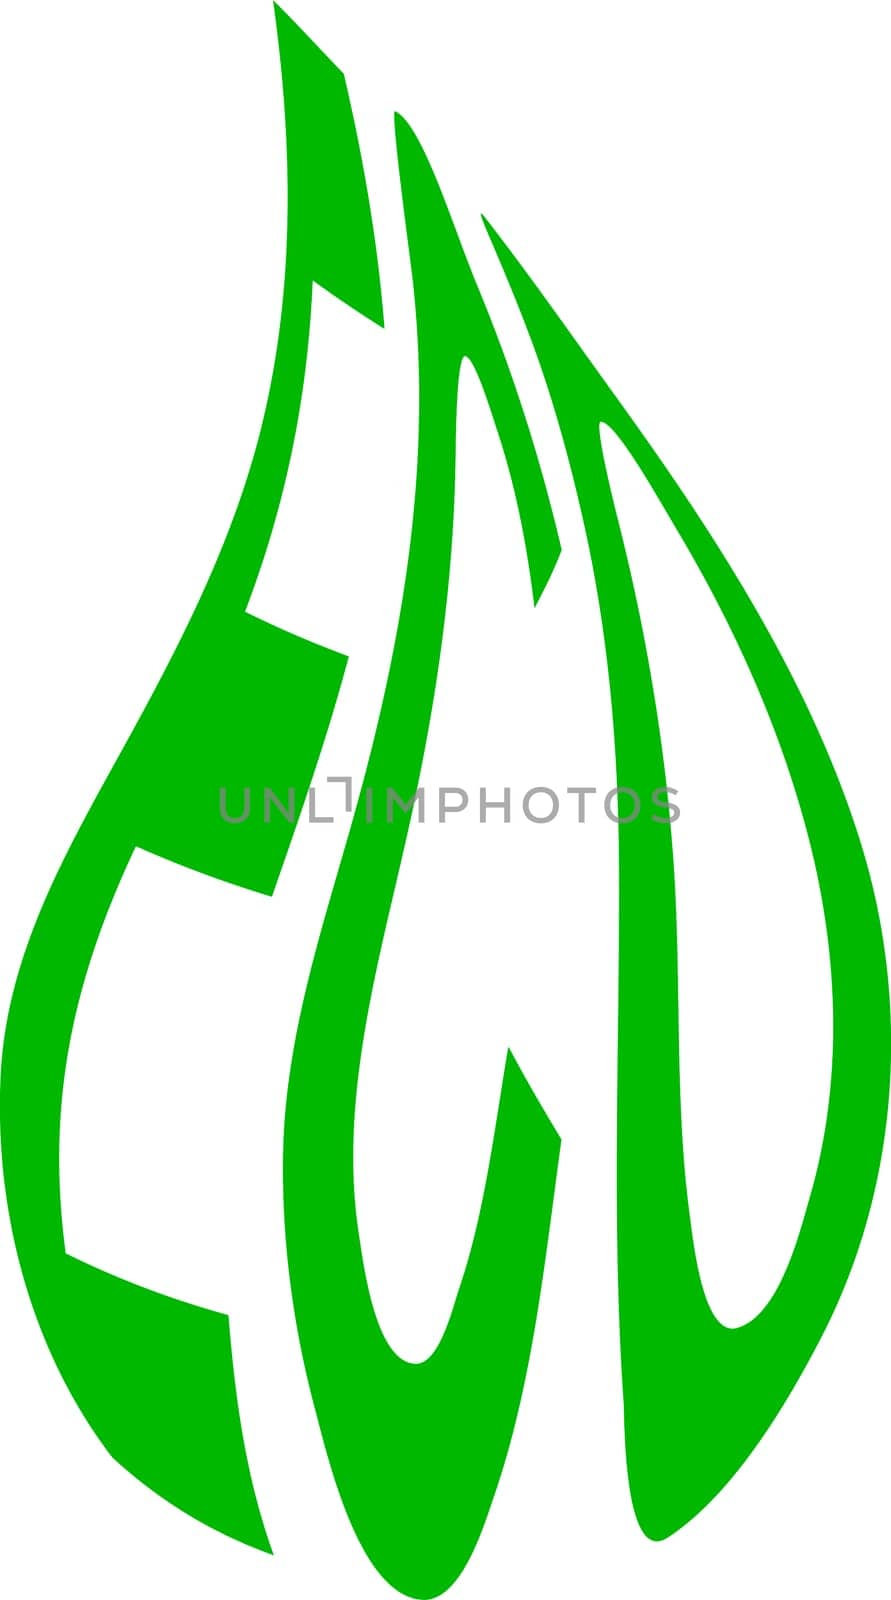 Word eco shape green leaf, eco concept organic food natural